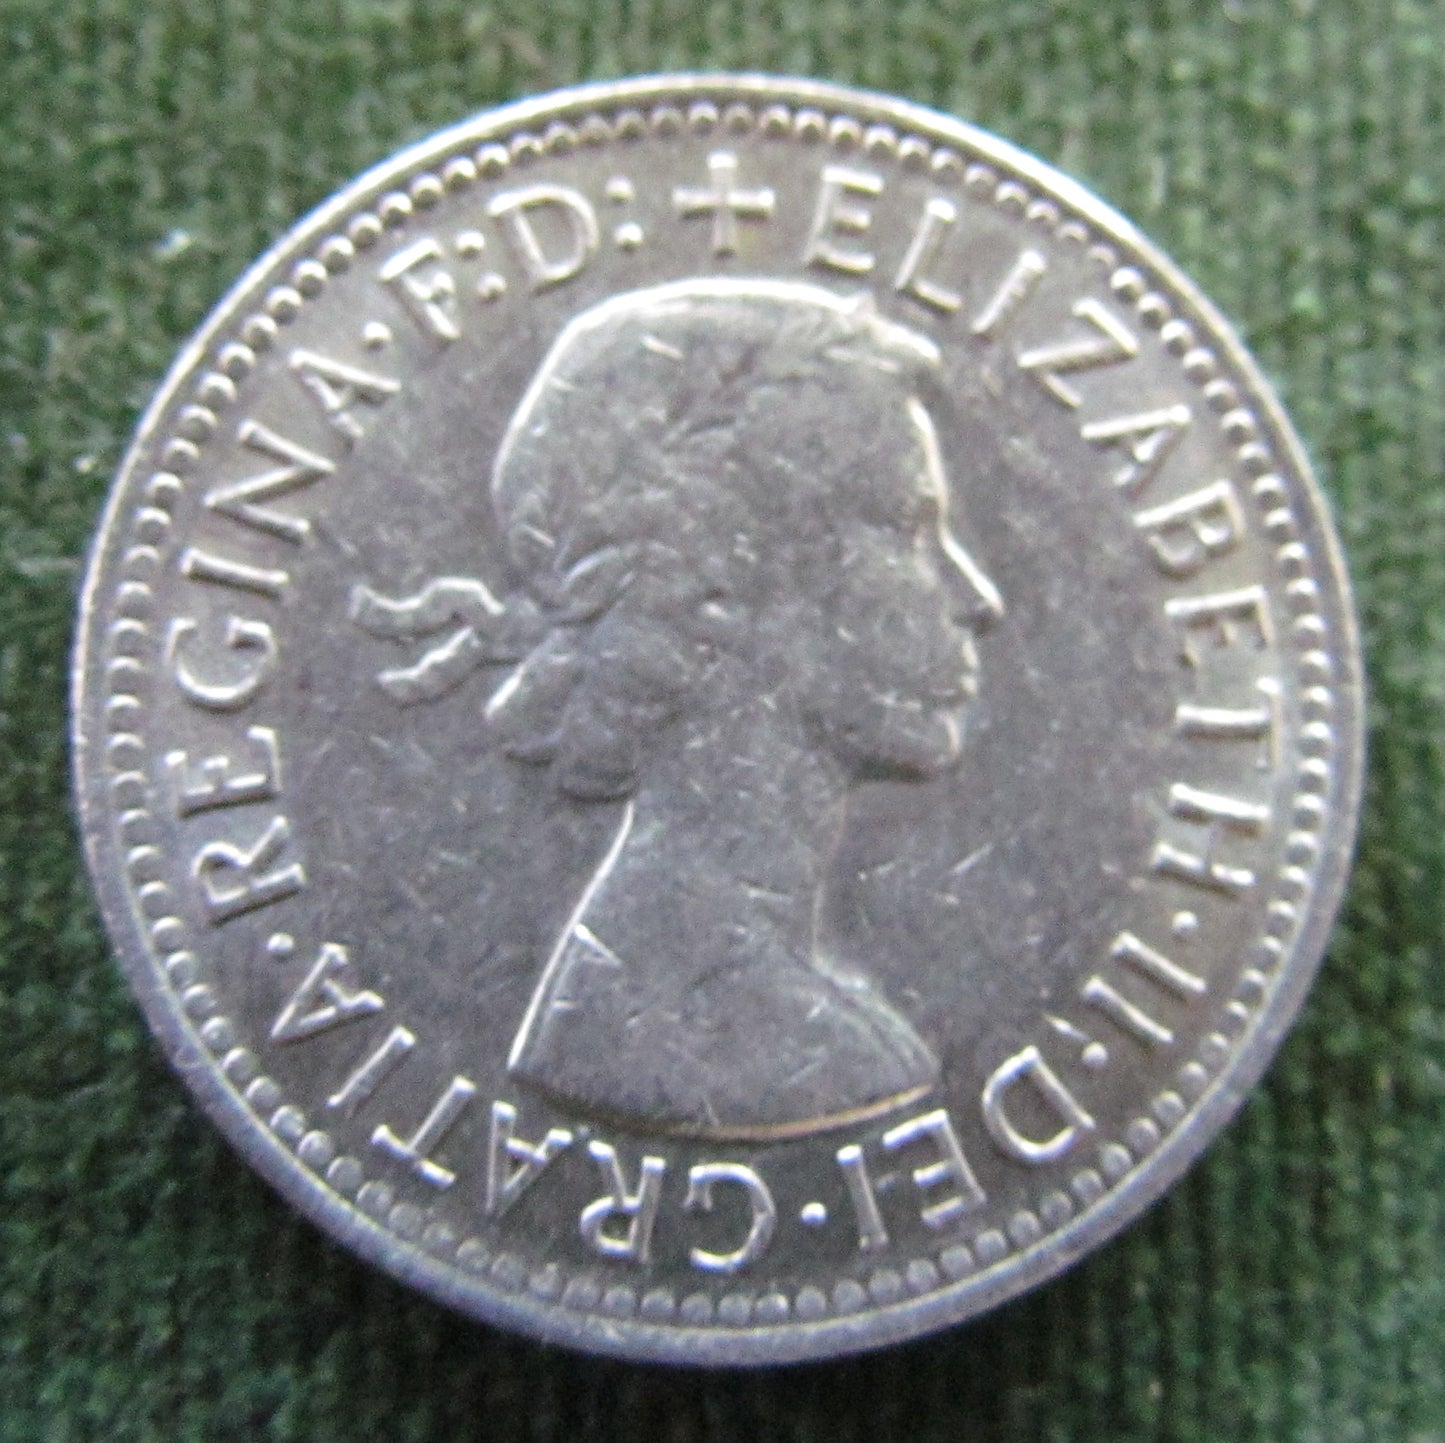 Australian 1961 1/- 1 Shilling Queen Elizebeth II Coin Graded VF Plus - Variety Planchet Error